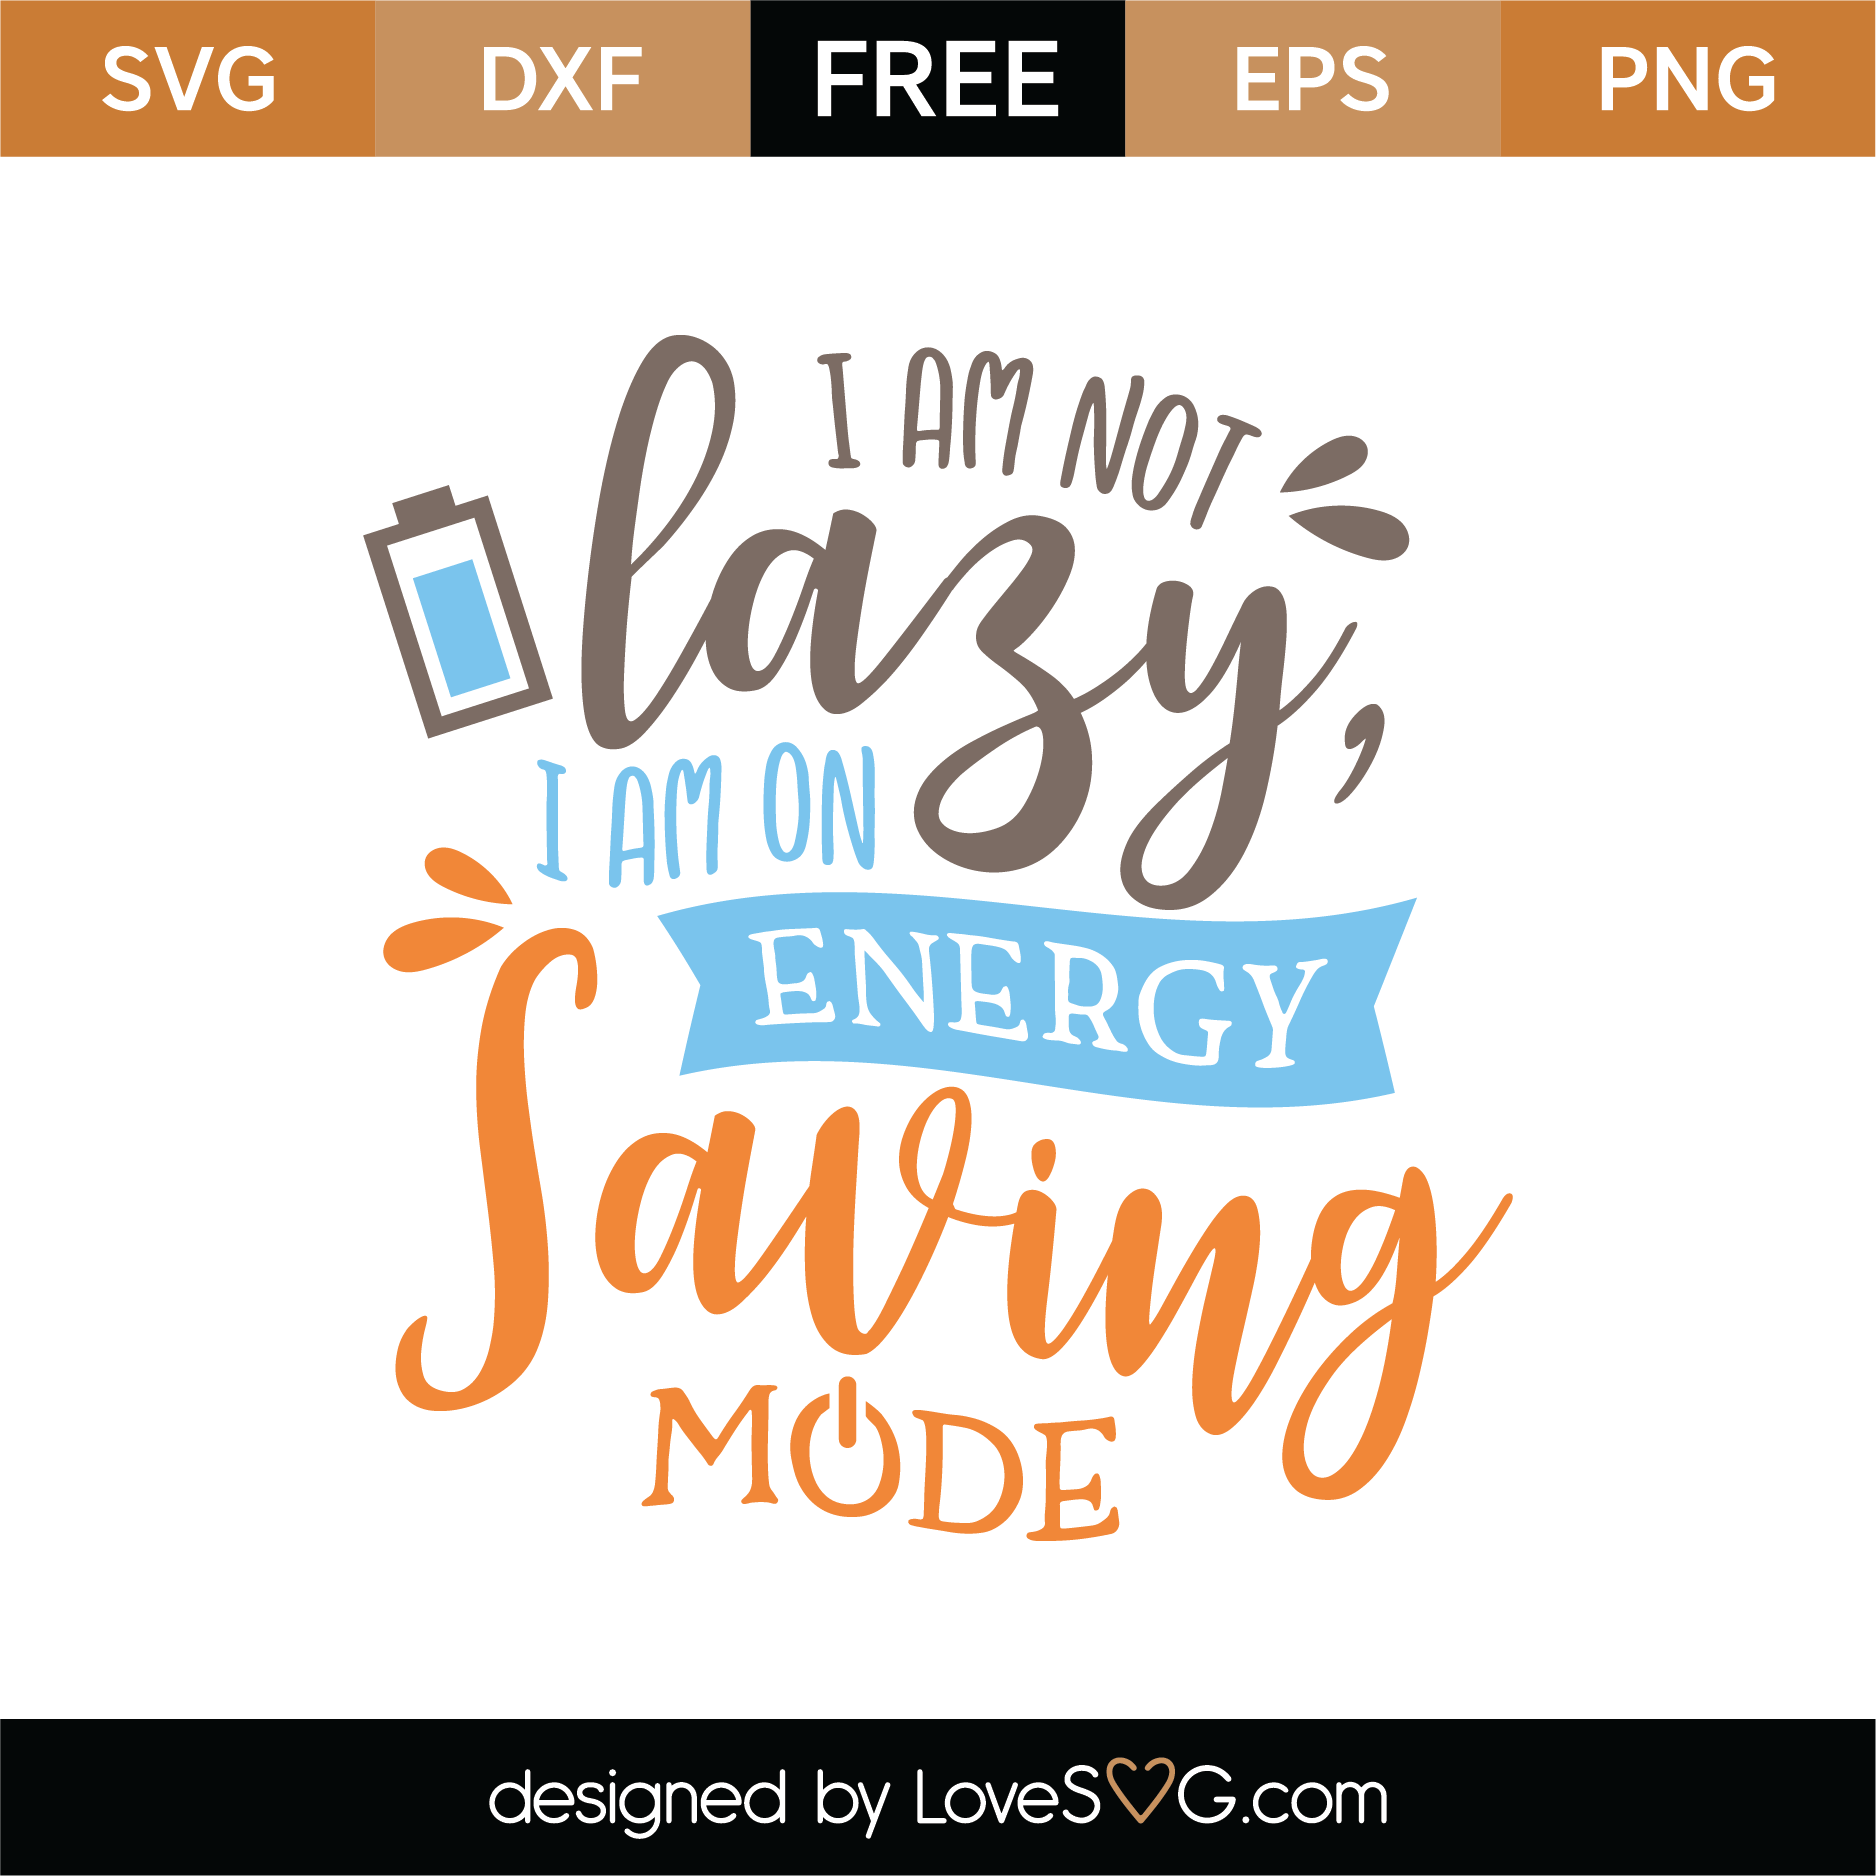 Download Free Energy Saving Mode SVG Cut File | Lovesvg.com